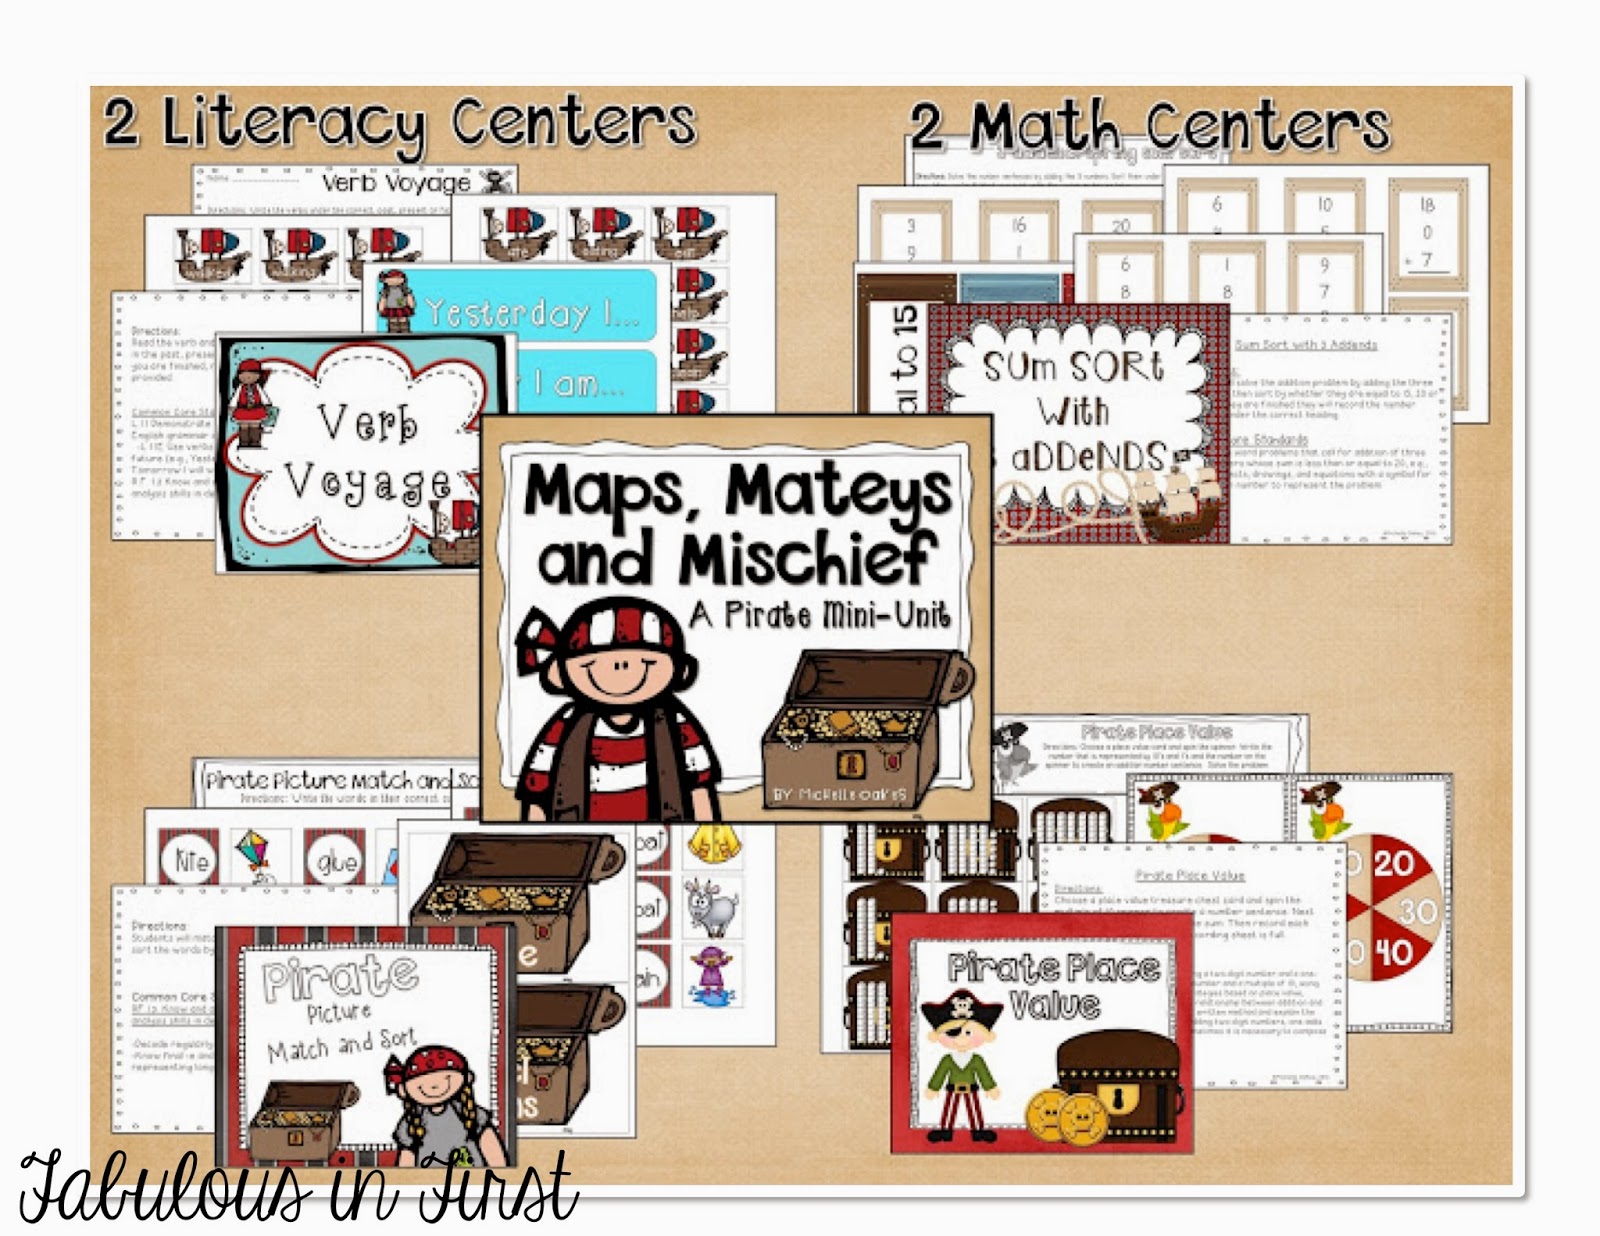 http://www.teacherspayteachers.com/Product/Maps-Mateys-and-Mischief-A-pirate-map-skills-unit-638581